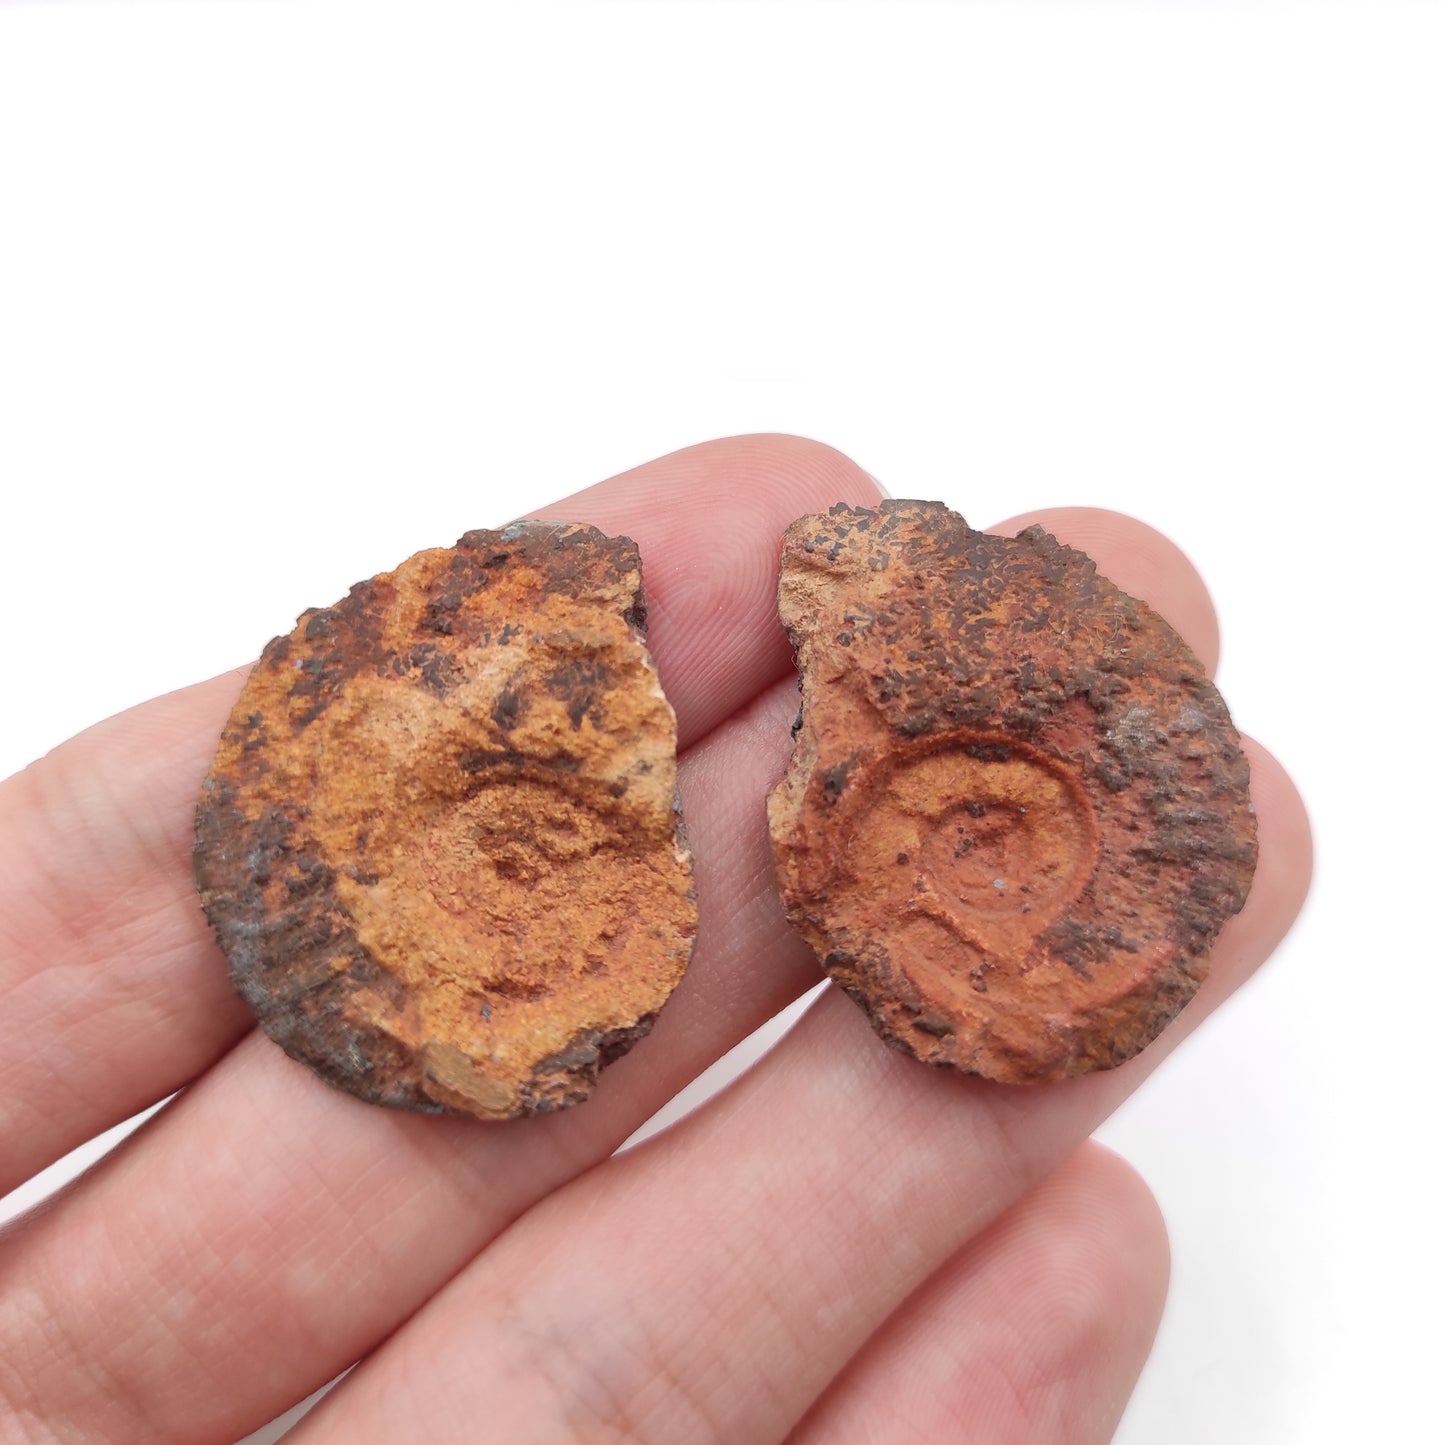 9g Ammonite Fossil Pair